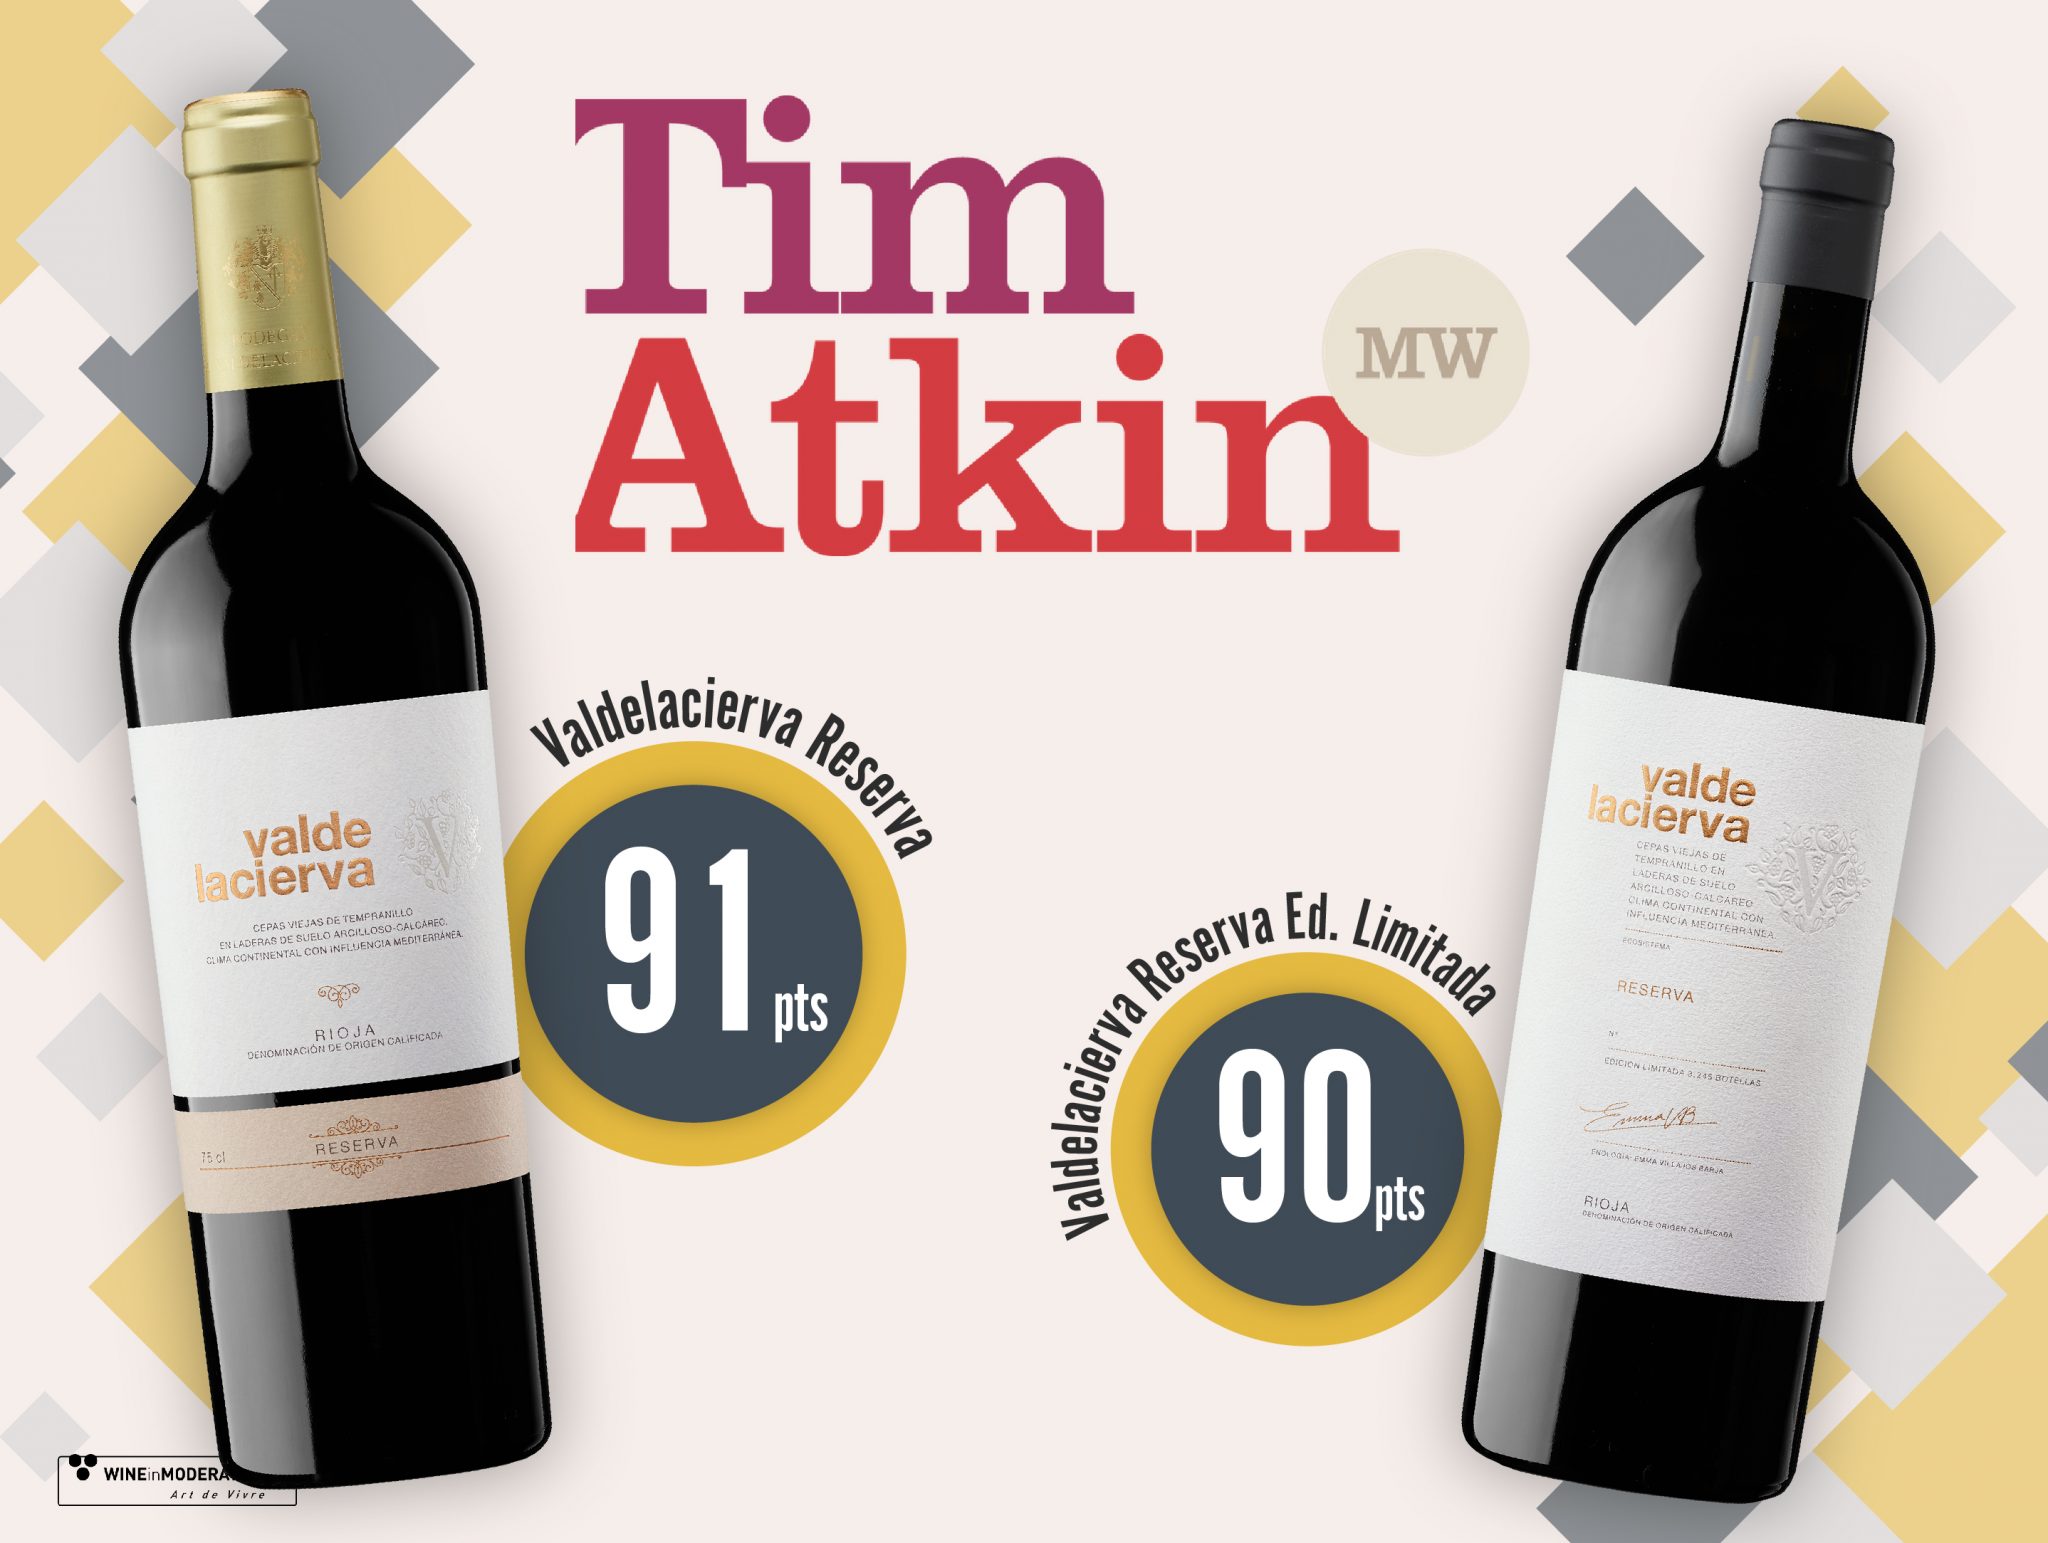 The Valdelacierva Reserva wines have been rated by Tim Atkin